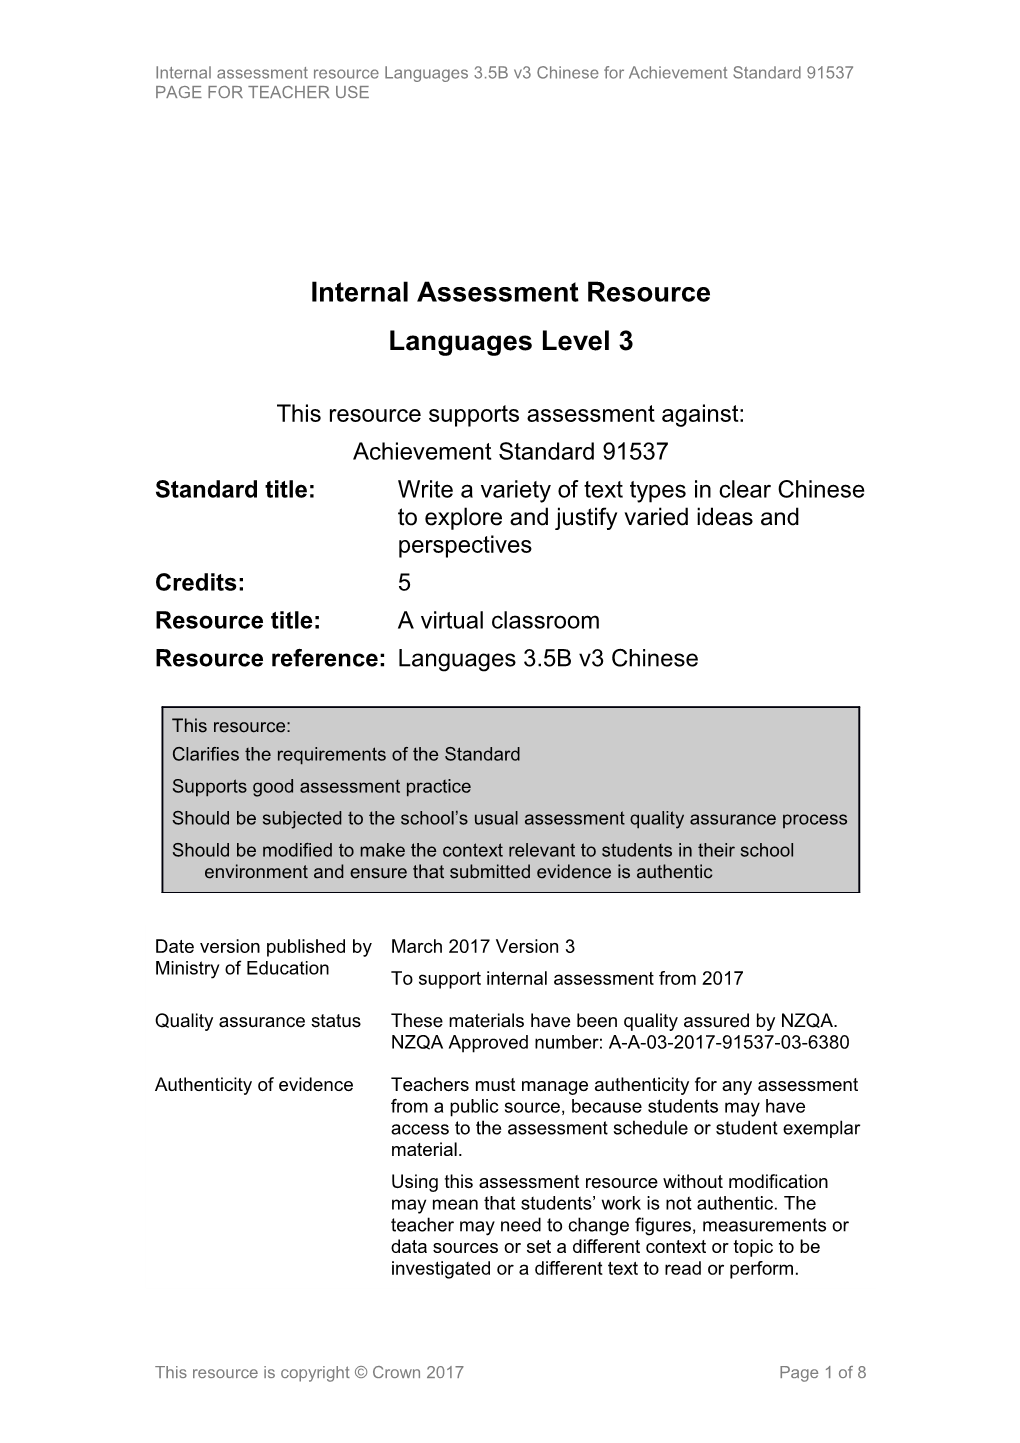 Level 3 Languages Internal Assessment Resource